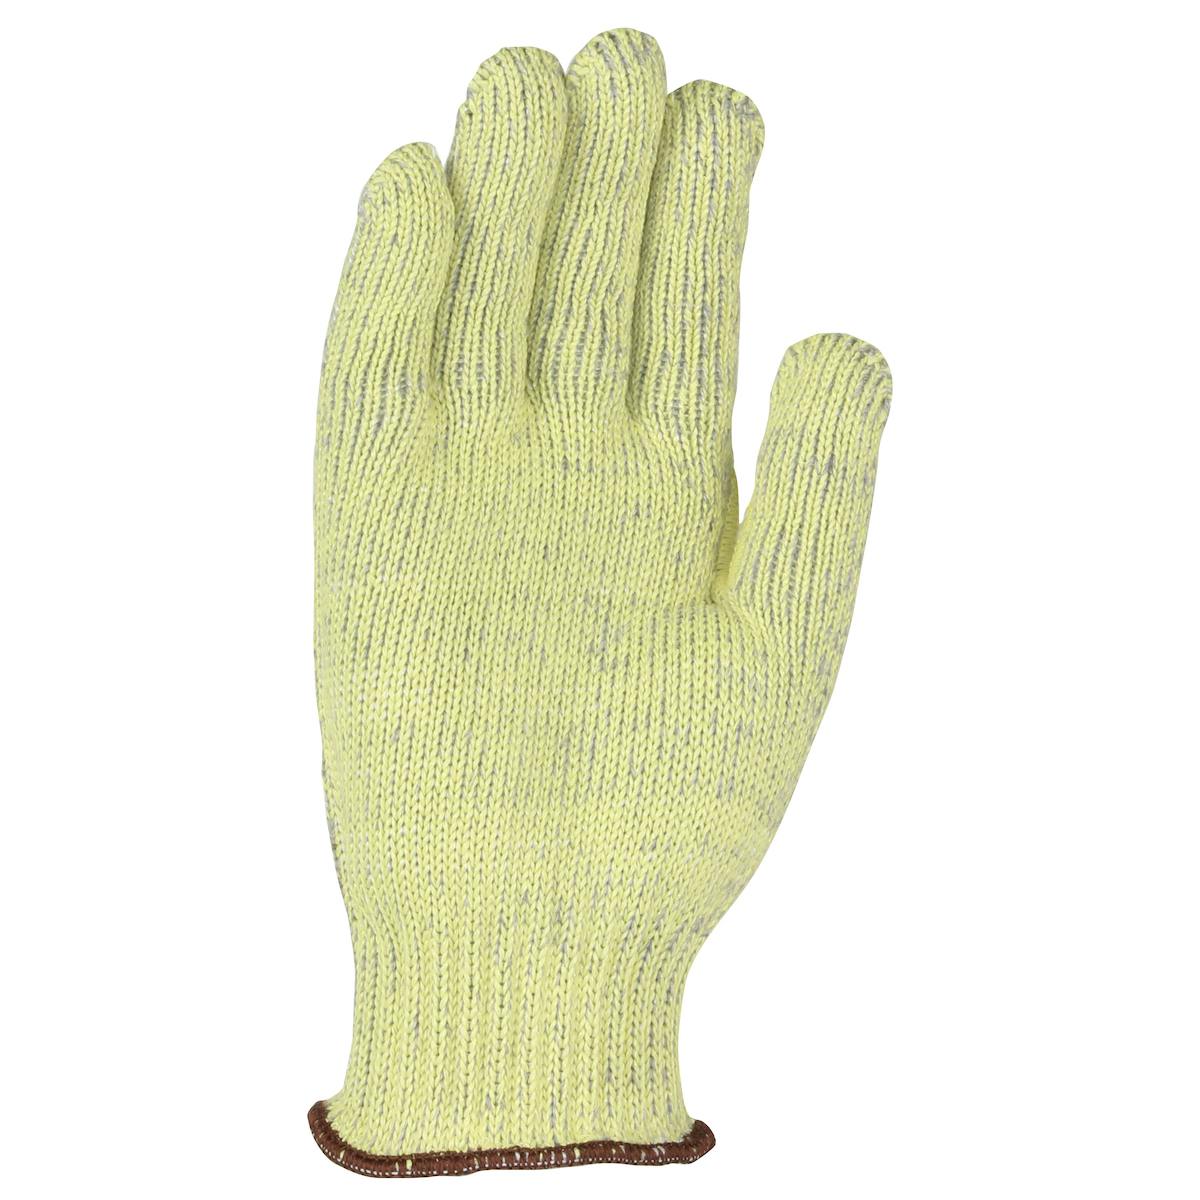 Kut Gard® Seamless Knit ATA® / Nylon Blended Glove - Heavy Weight (MATA30BALGY-OERTC)